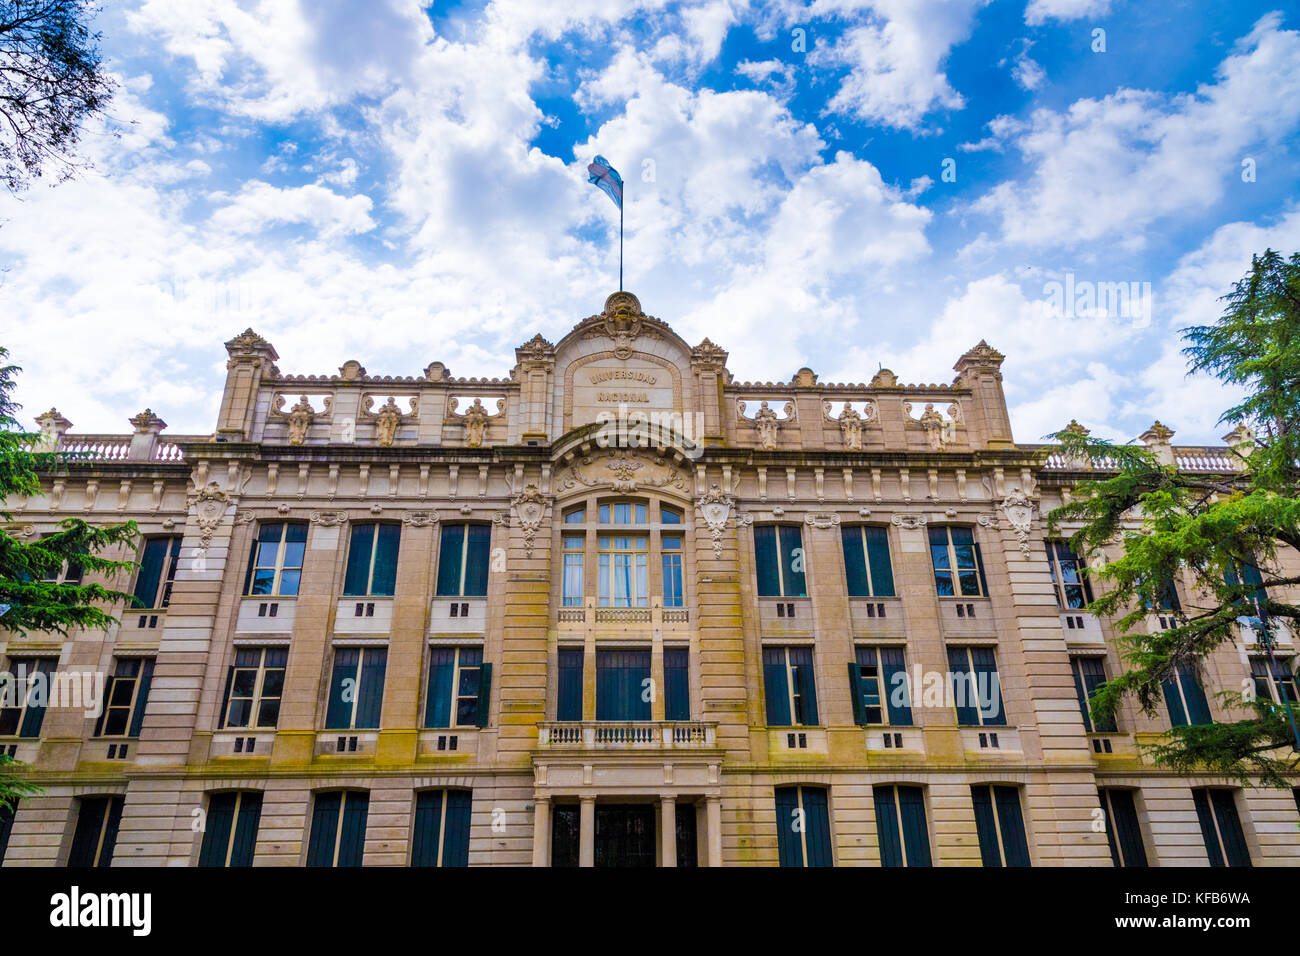 La Plata university facade and beautiful sky Stock Photo